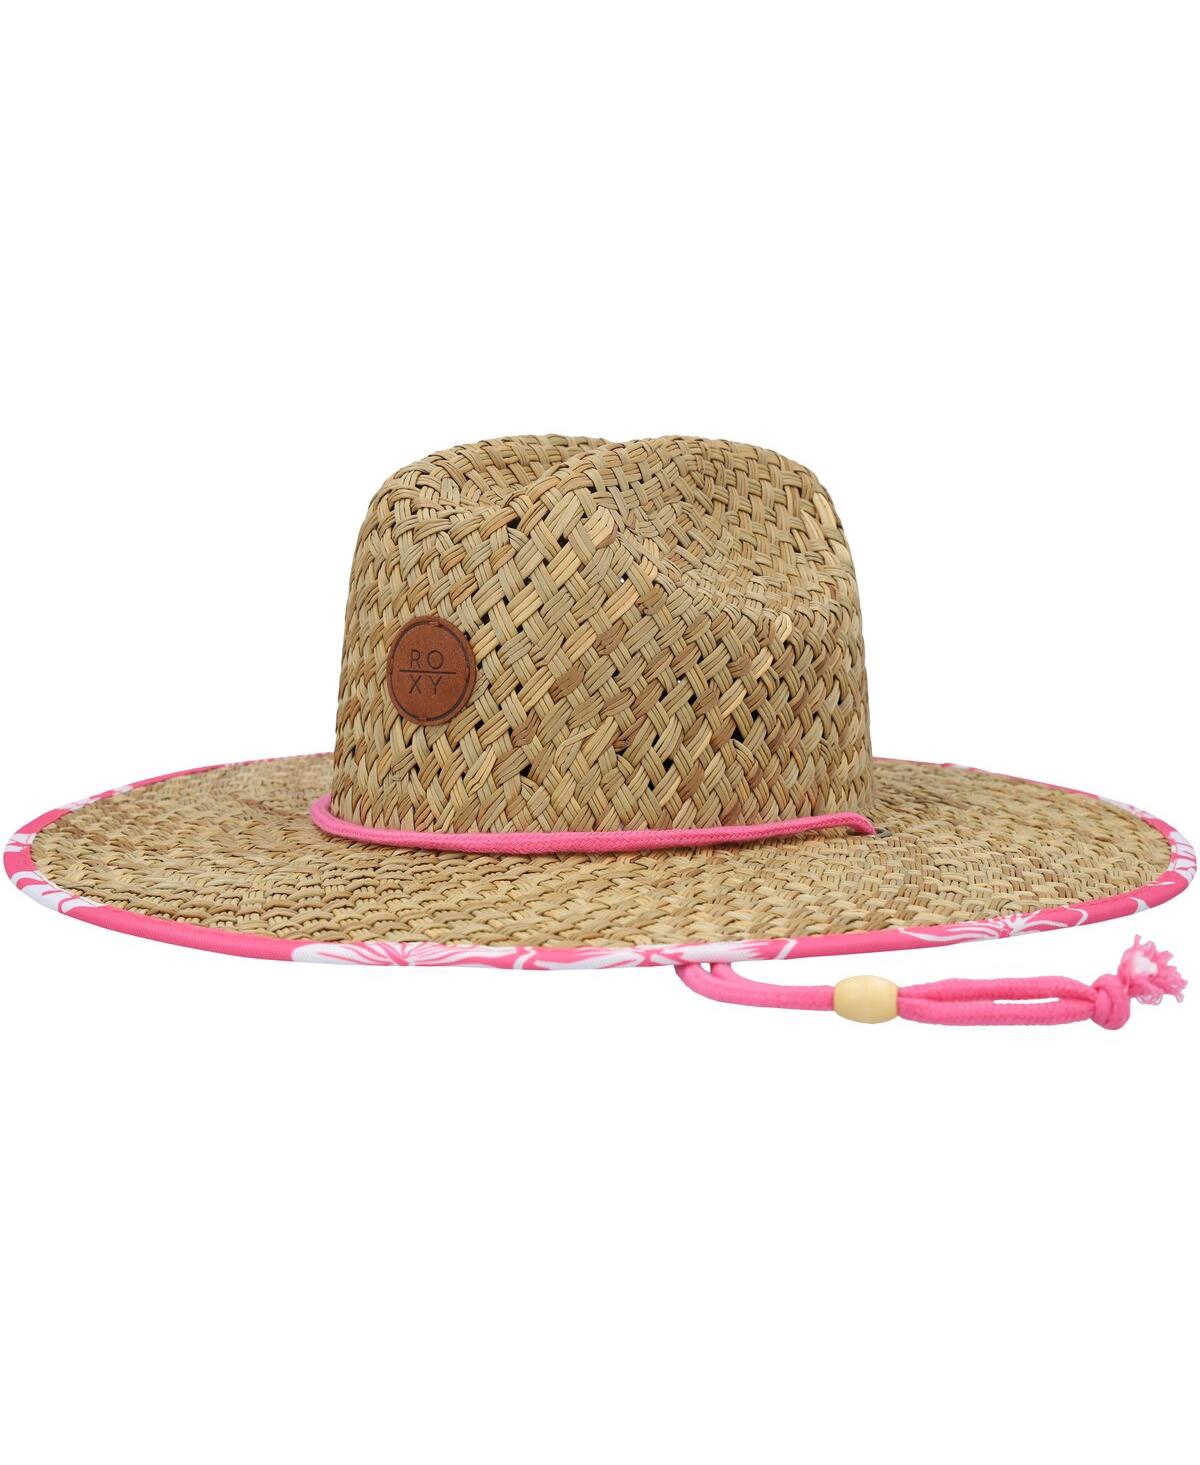 Women's Roxy Natural Pina to My Colada Printed Straw Lifeguard Hat - Natural